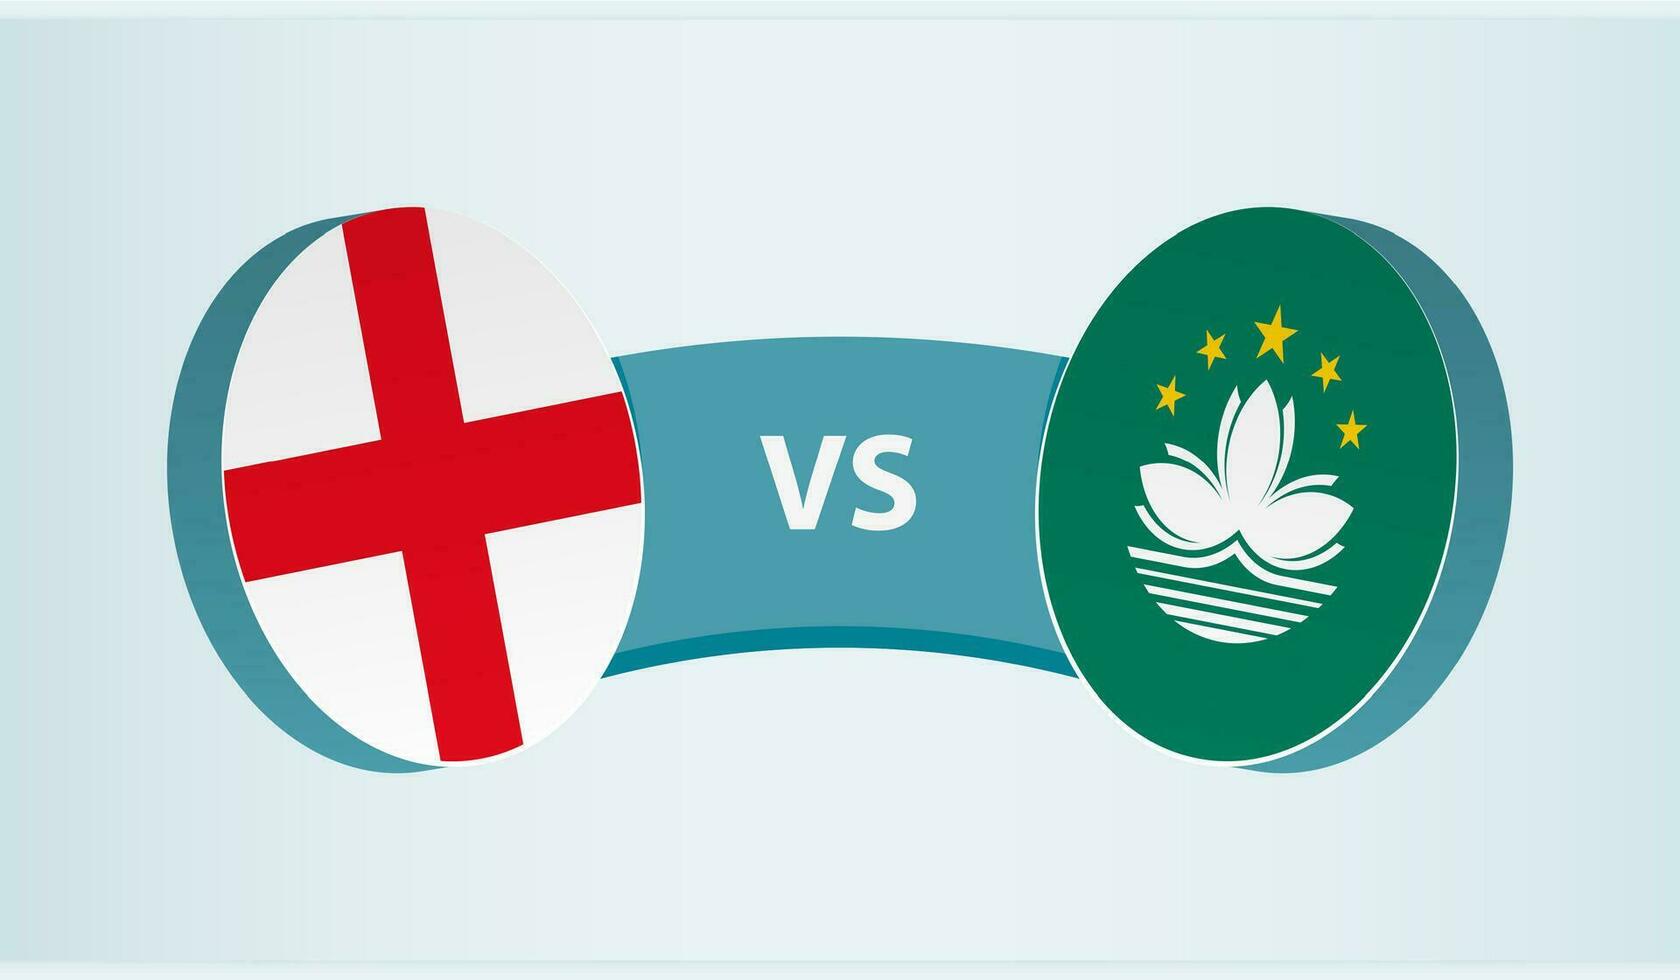 England mot Macau, team sporter konkurrens begrepp. vektor